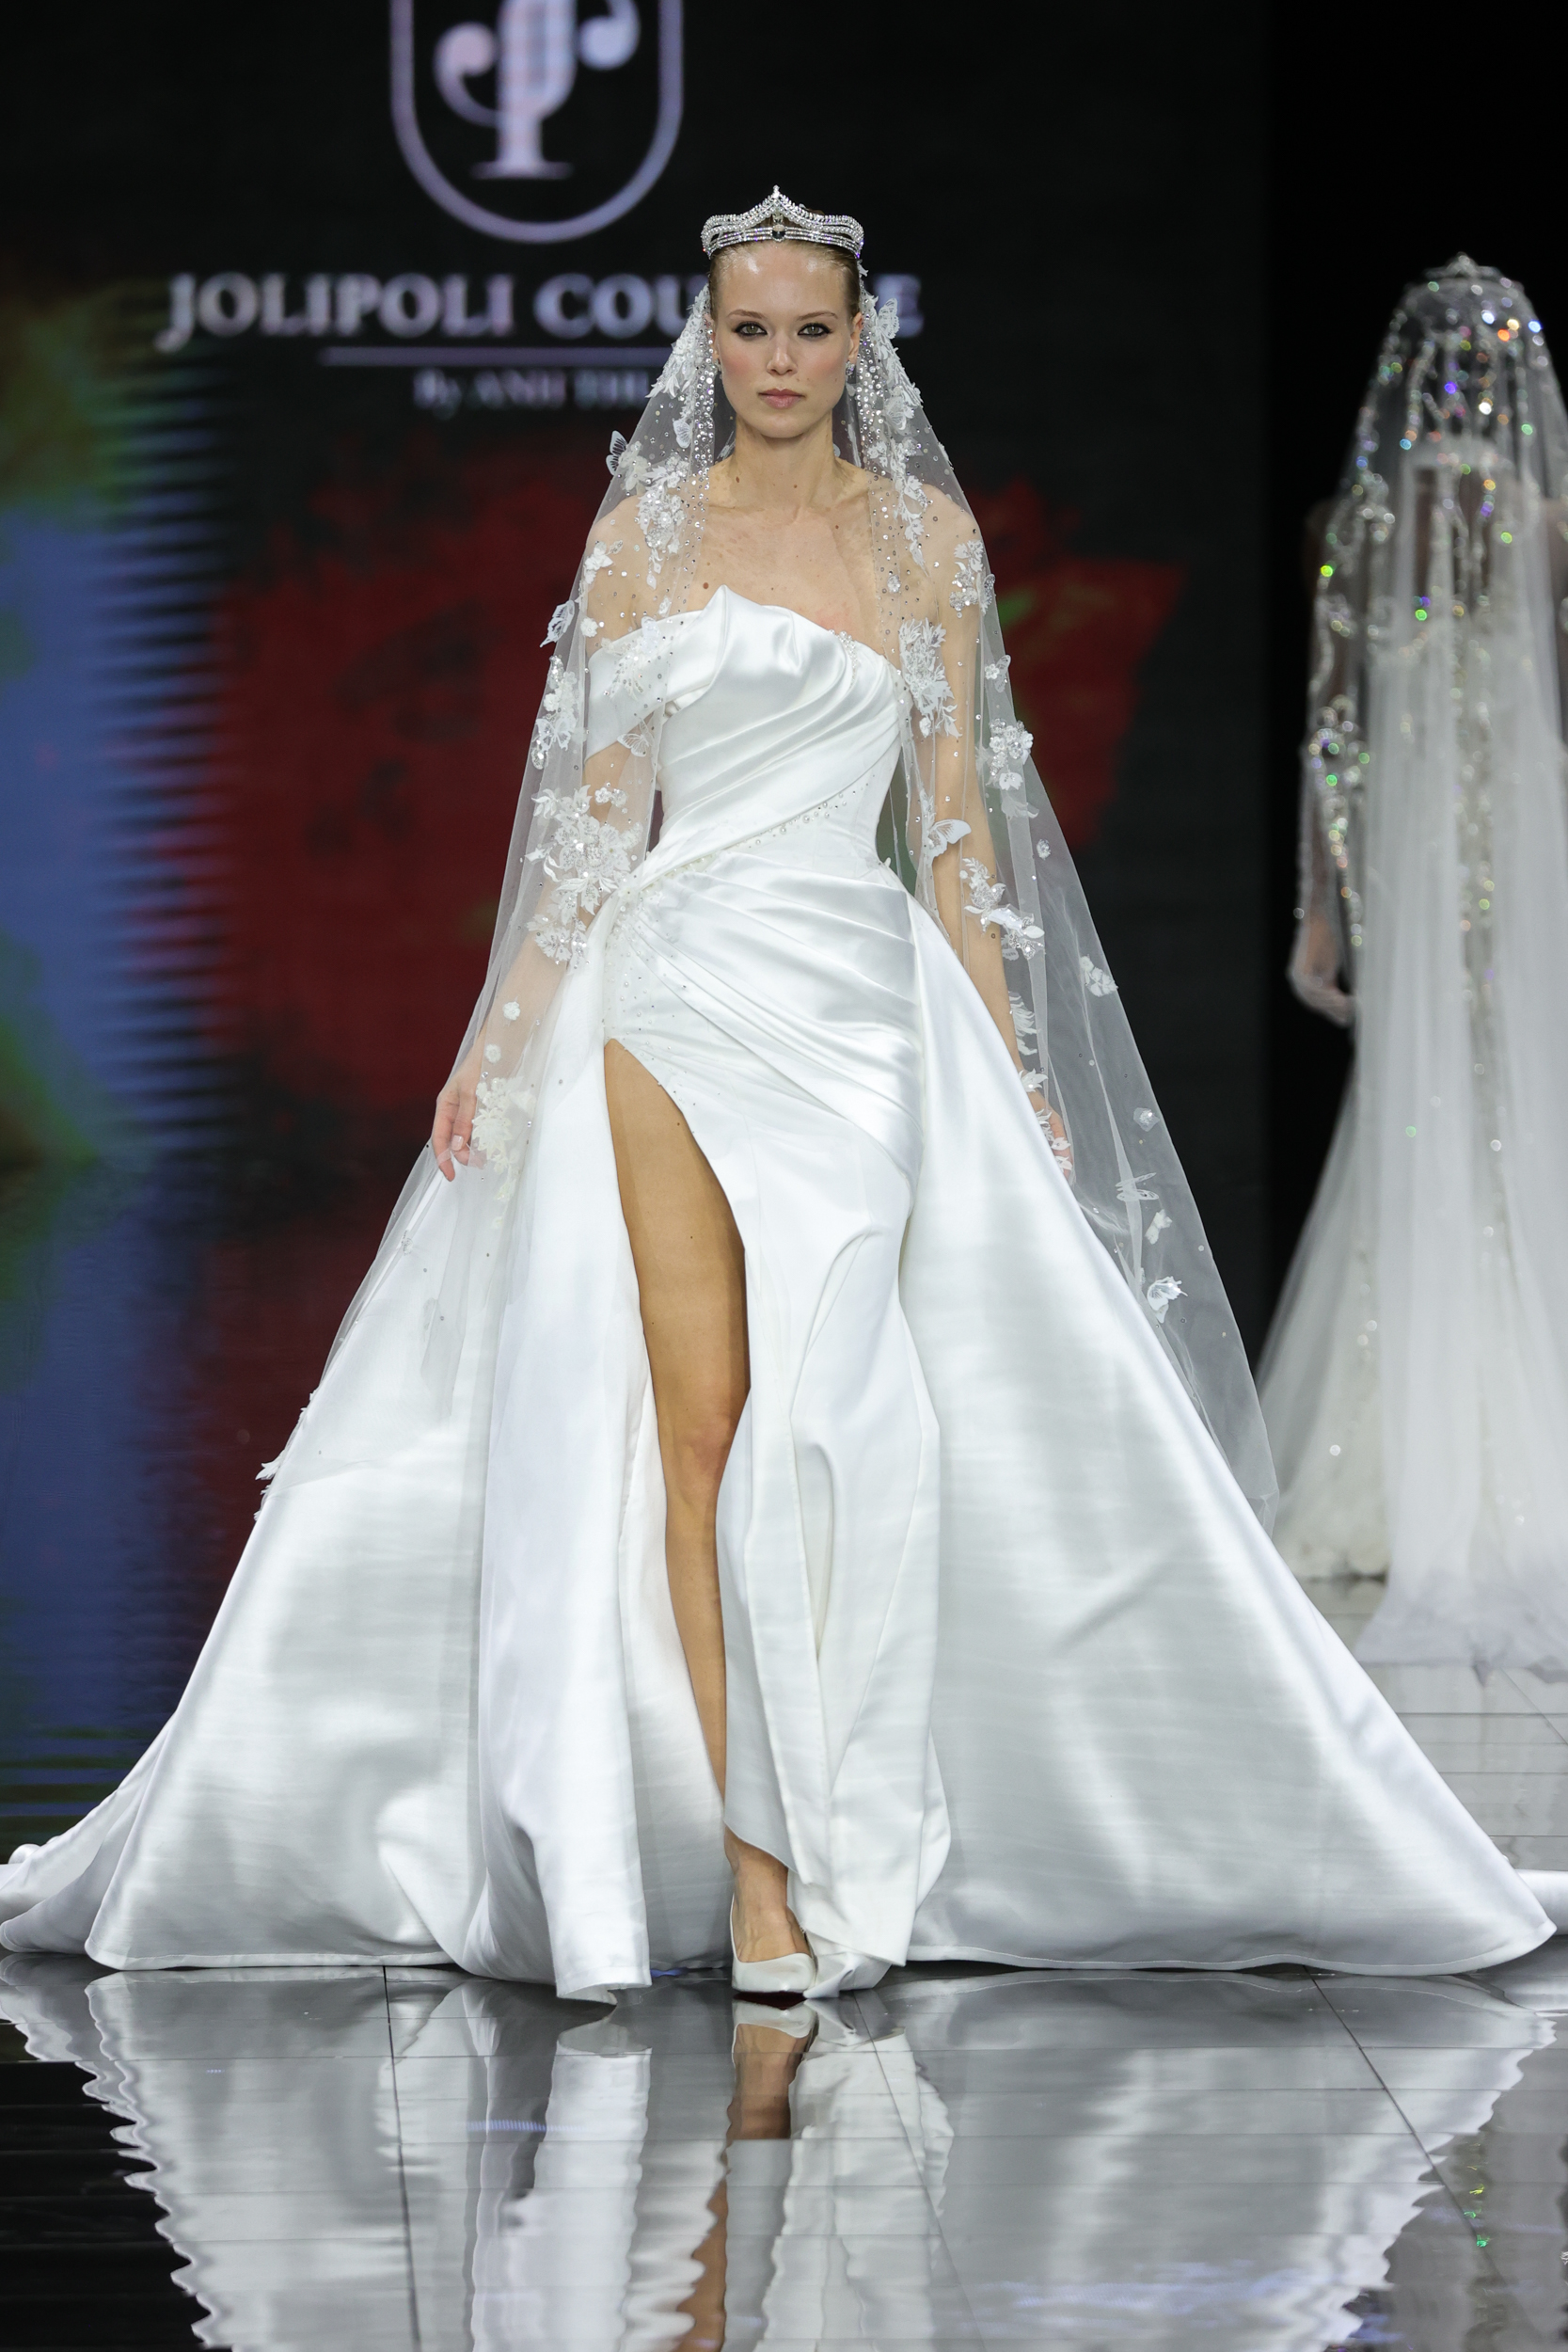 Joli Poli Bridal 2024 Fashion Show 